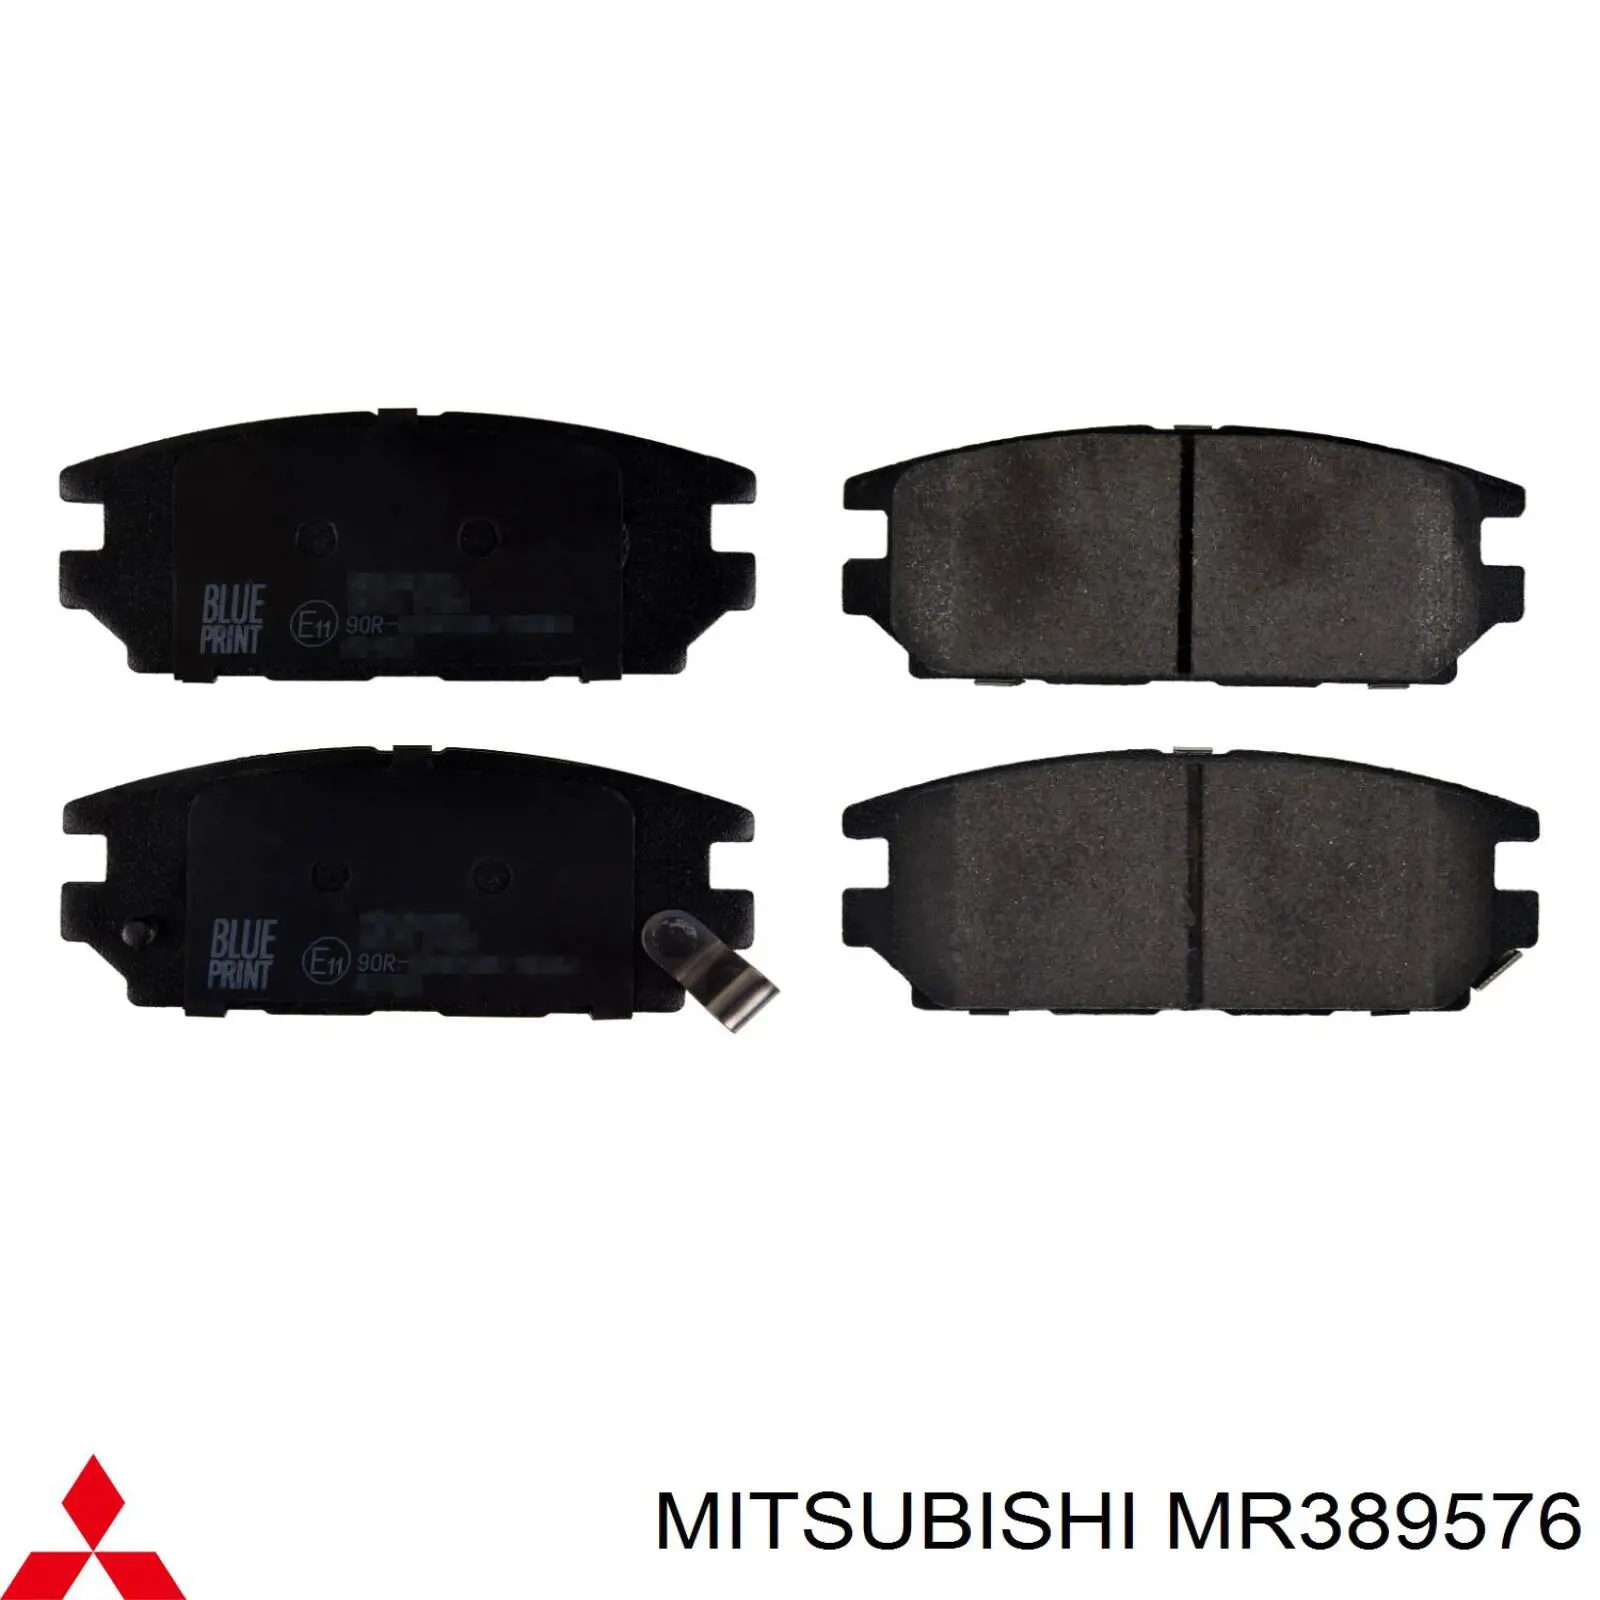 MR389576 Mitsubishi задние тормозные колодки